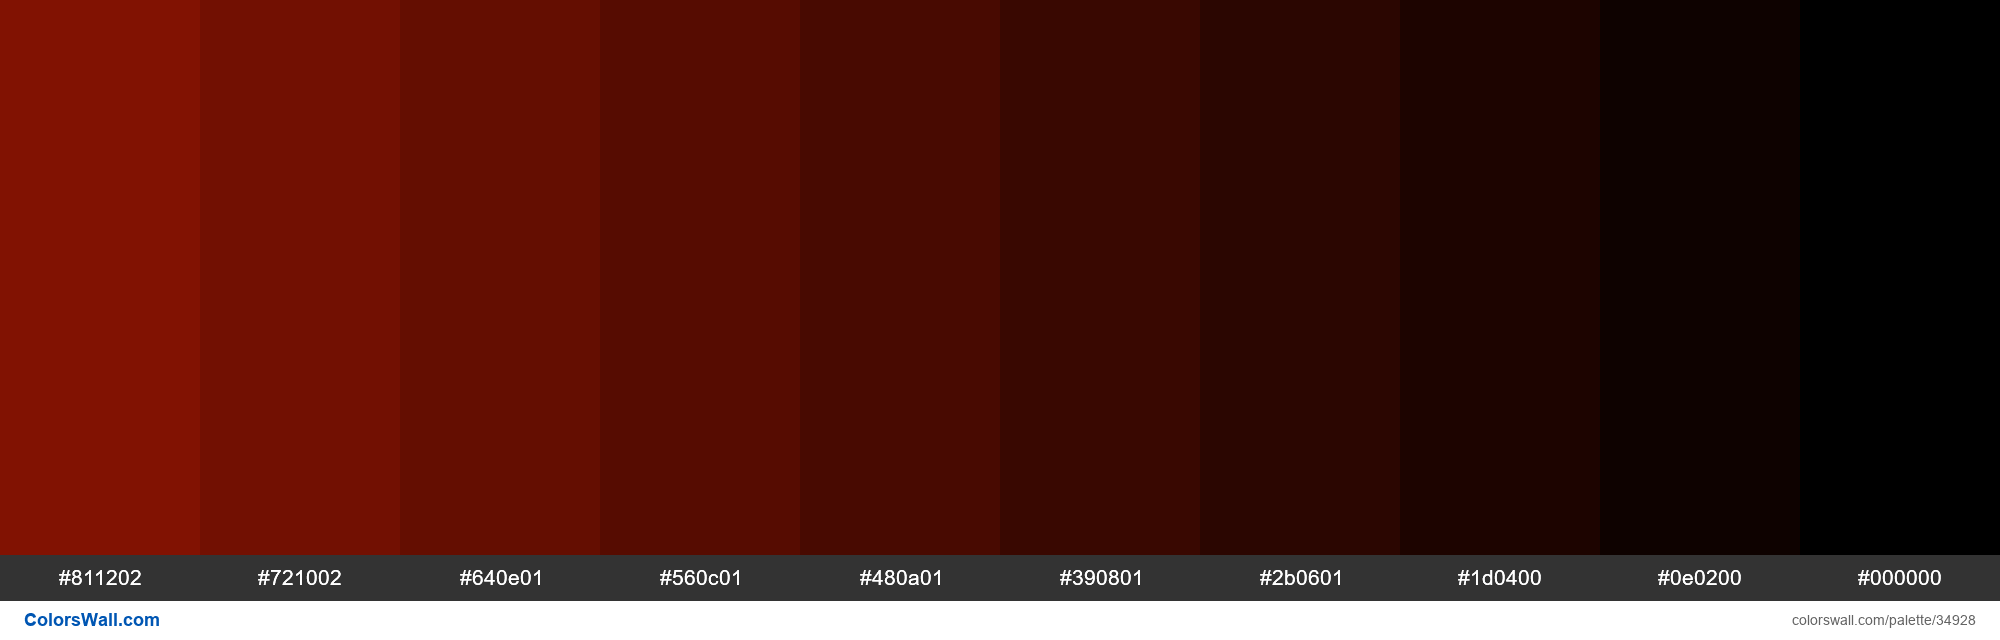 Baglæns tidligere melodi Shades XKCD Color brick red #8f1402 hex colors palette - ColorsWall